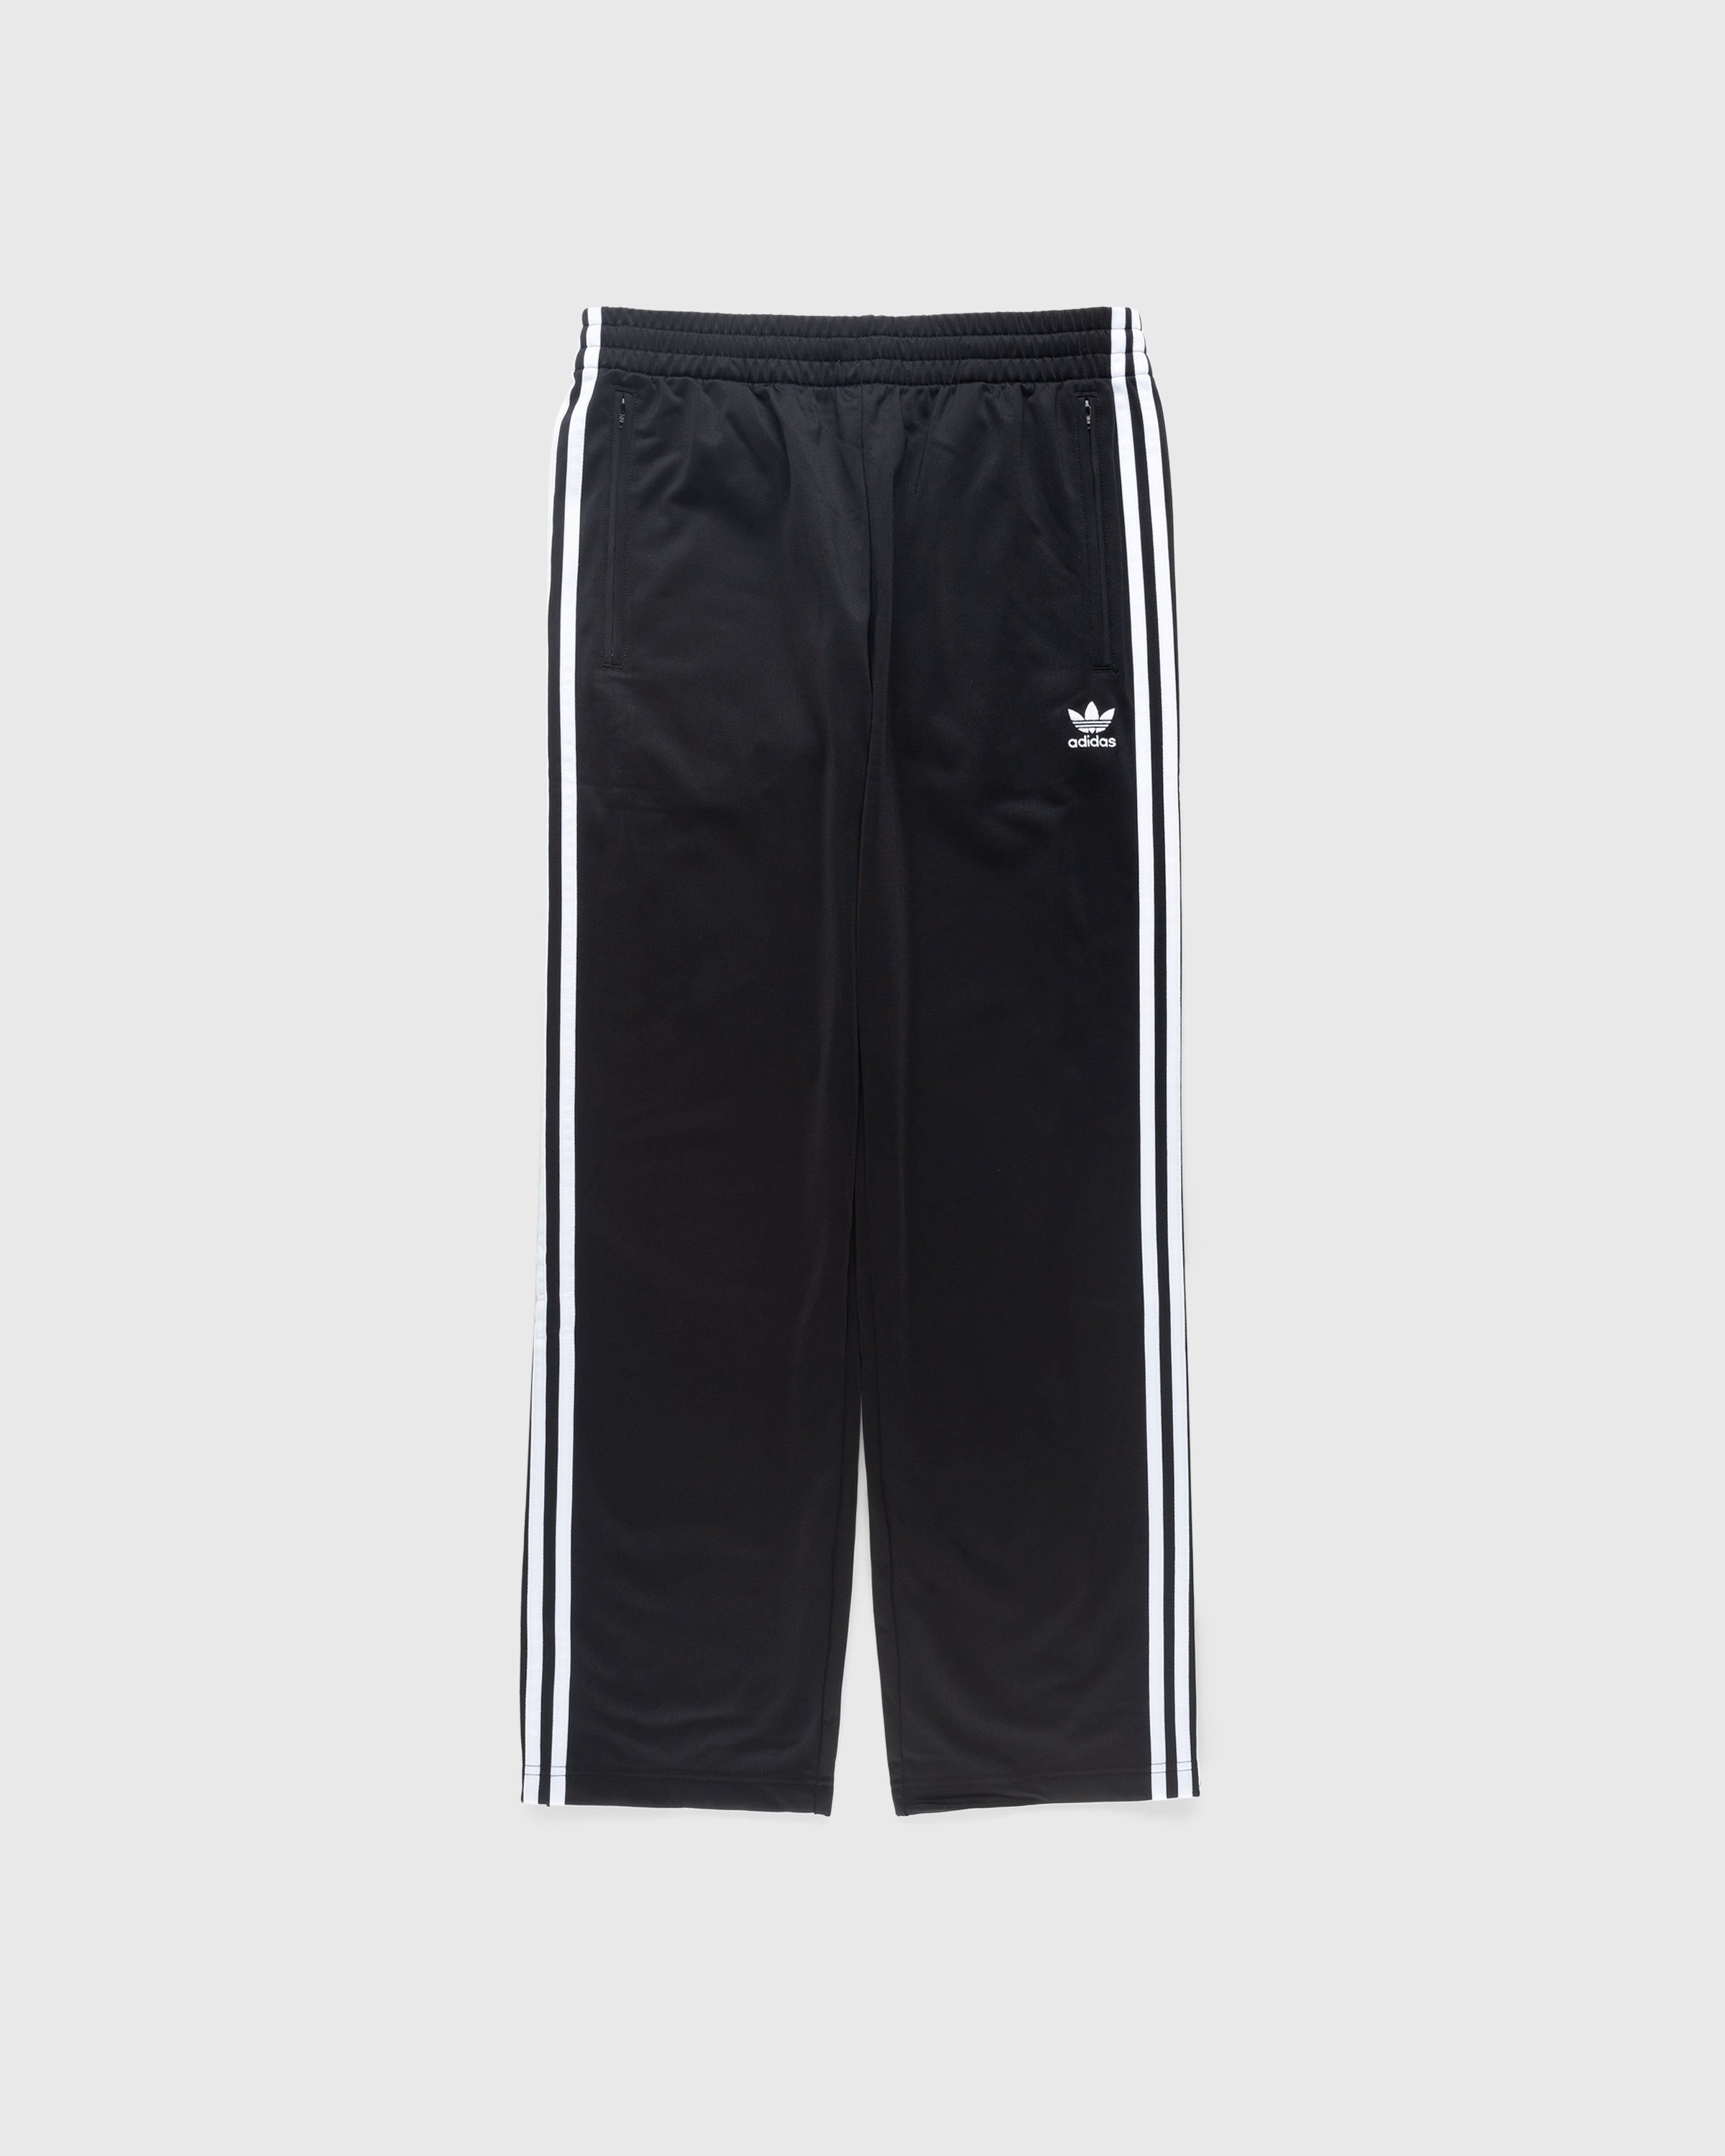 Adidas - Firebird Track Pants Black/White - Clothing - Black - Image 1